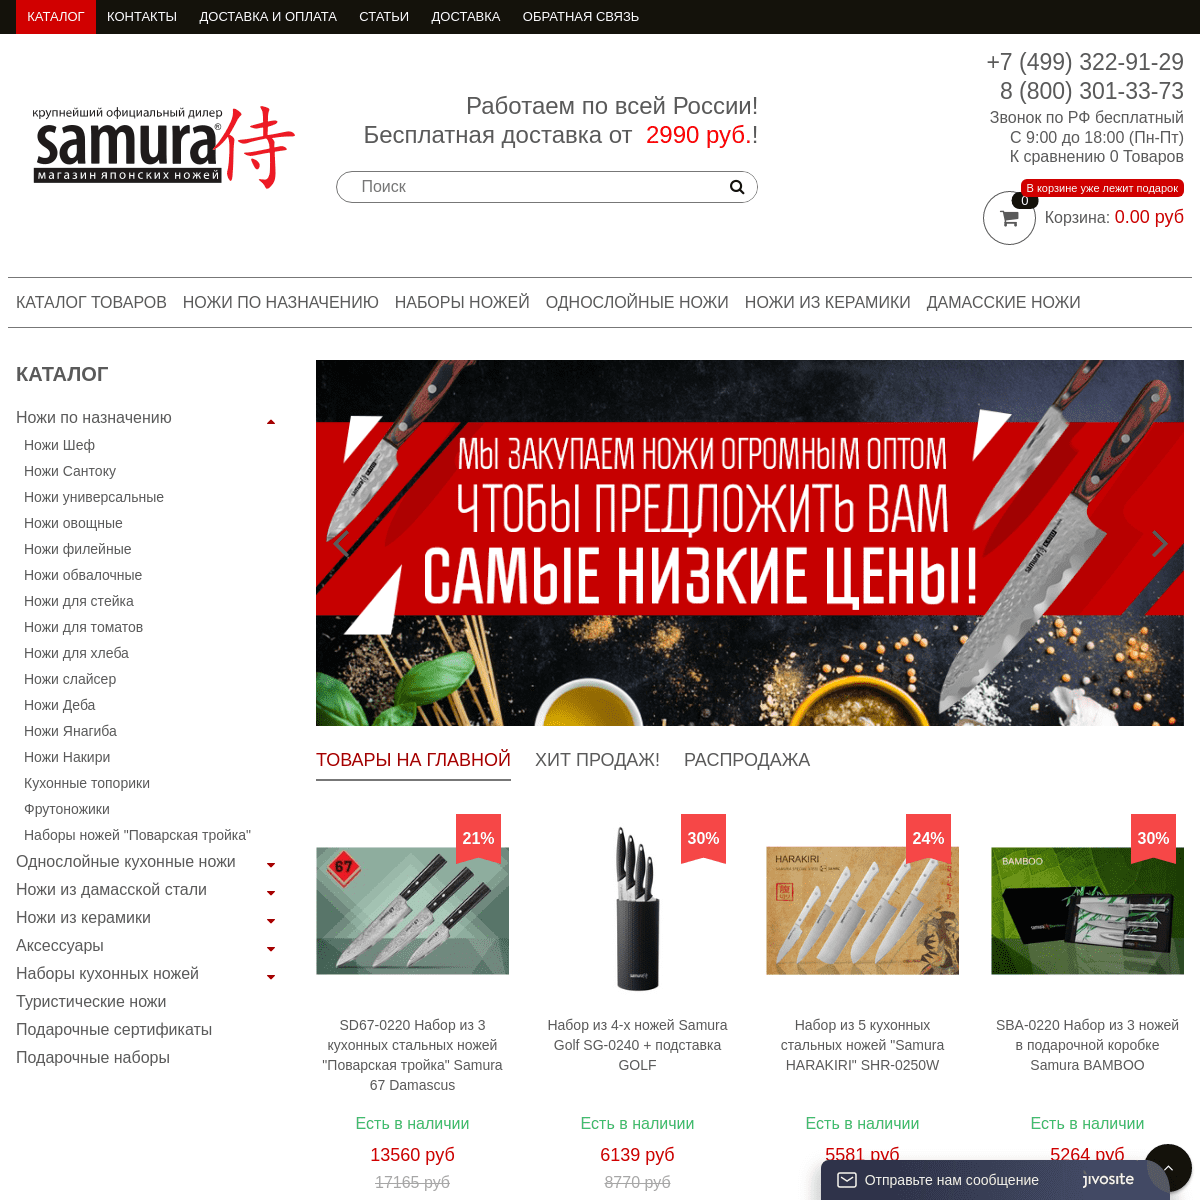 A complete backup of samura-shop.ru